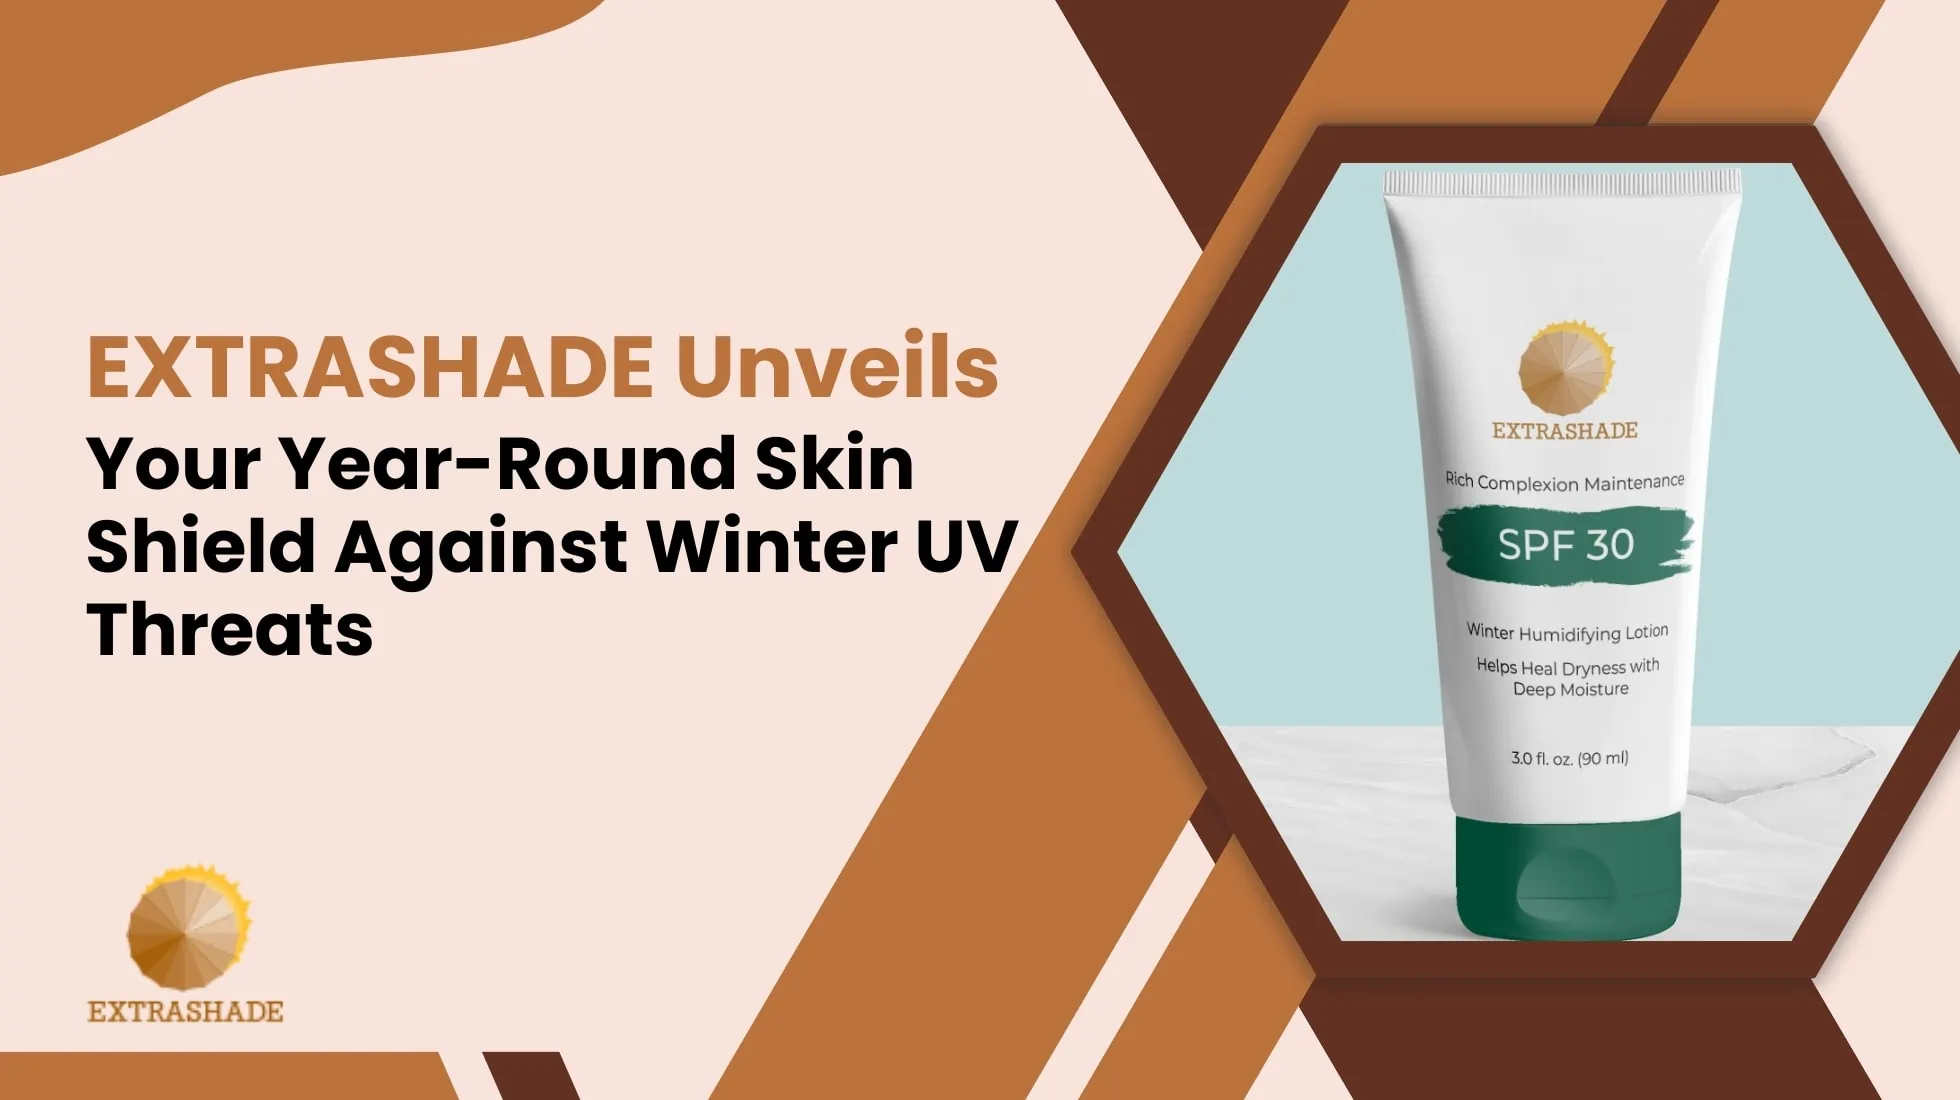 EXTRASHADE Unveils Your Year-Round Skin Shield Against Winter UV Threats